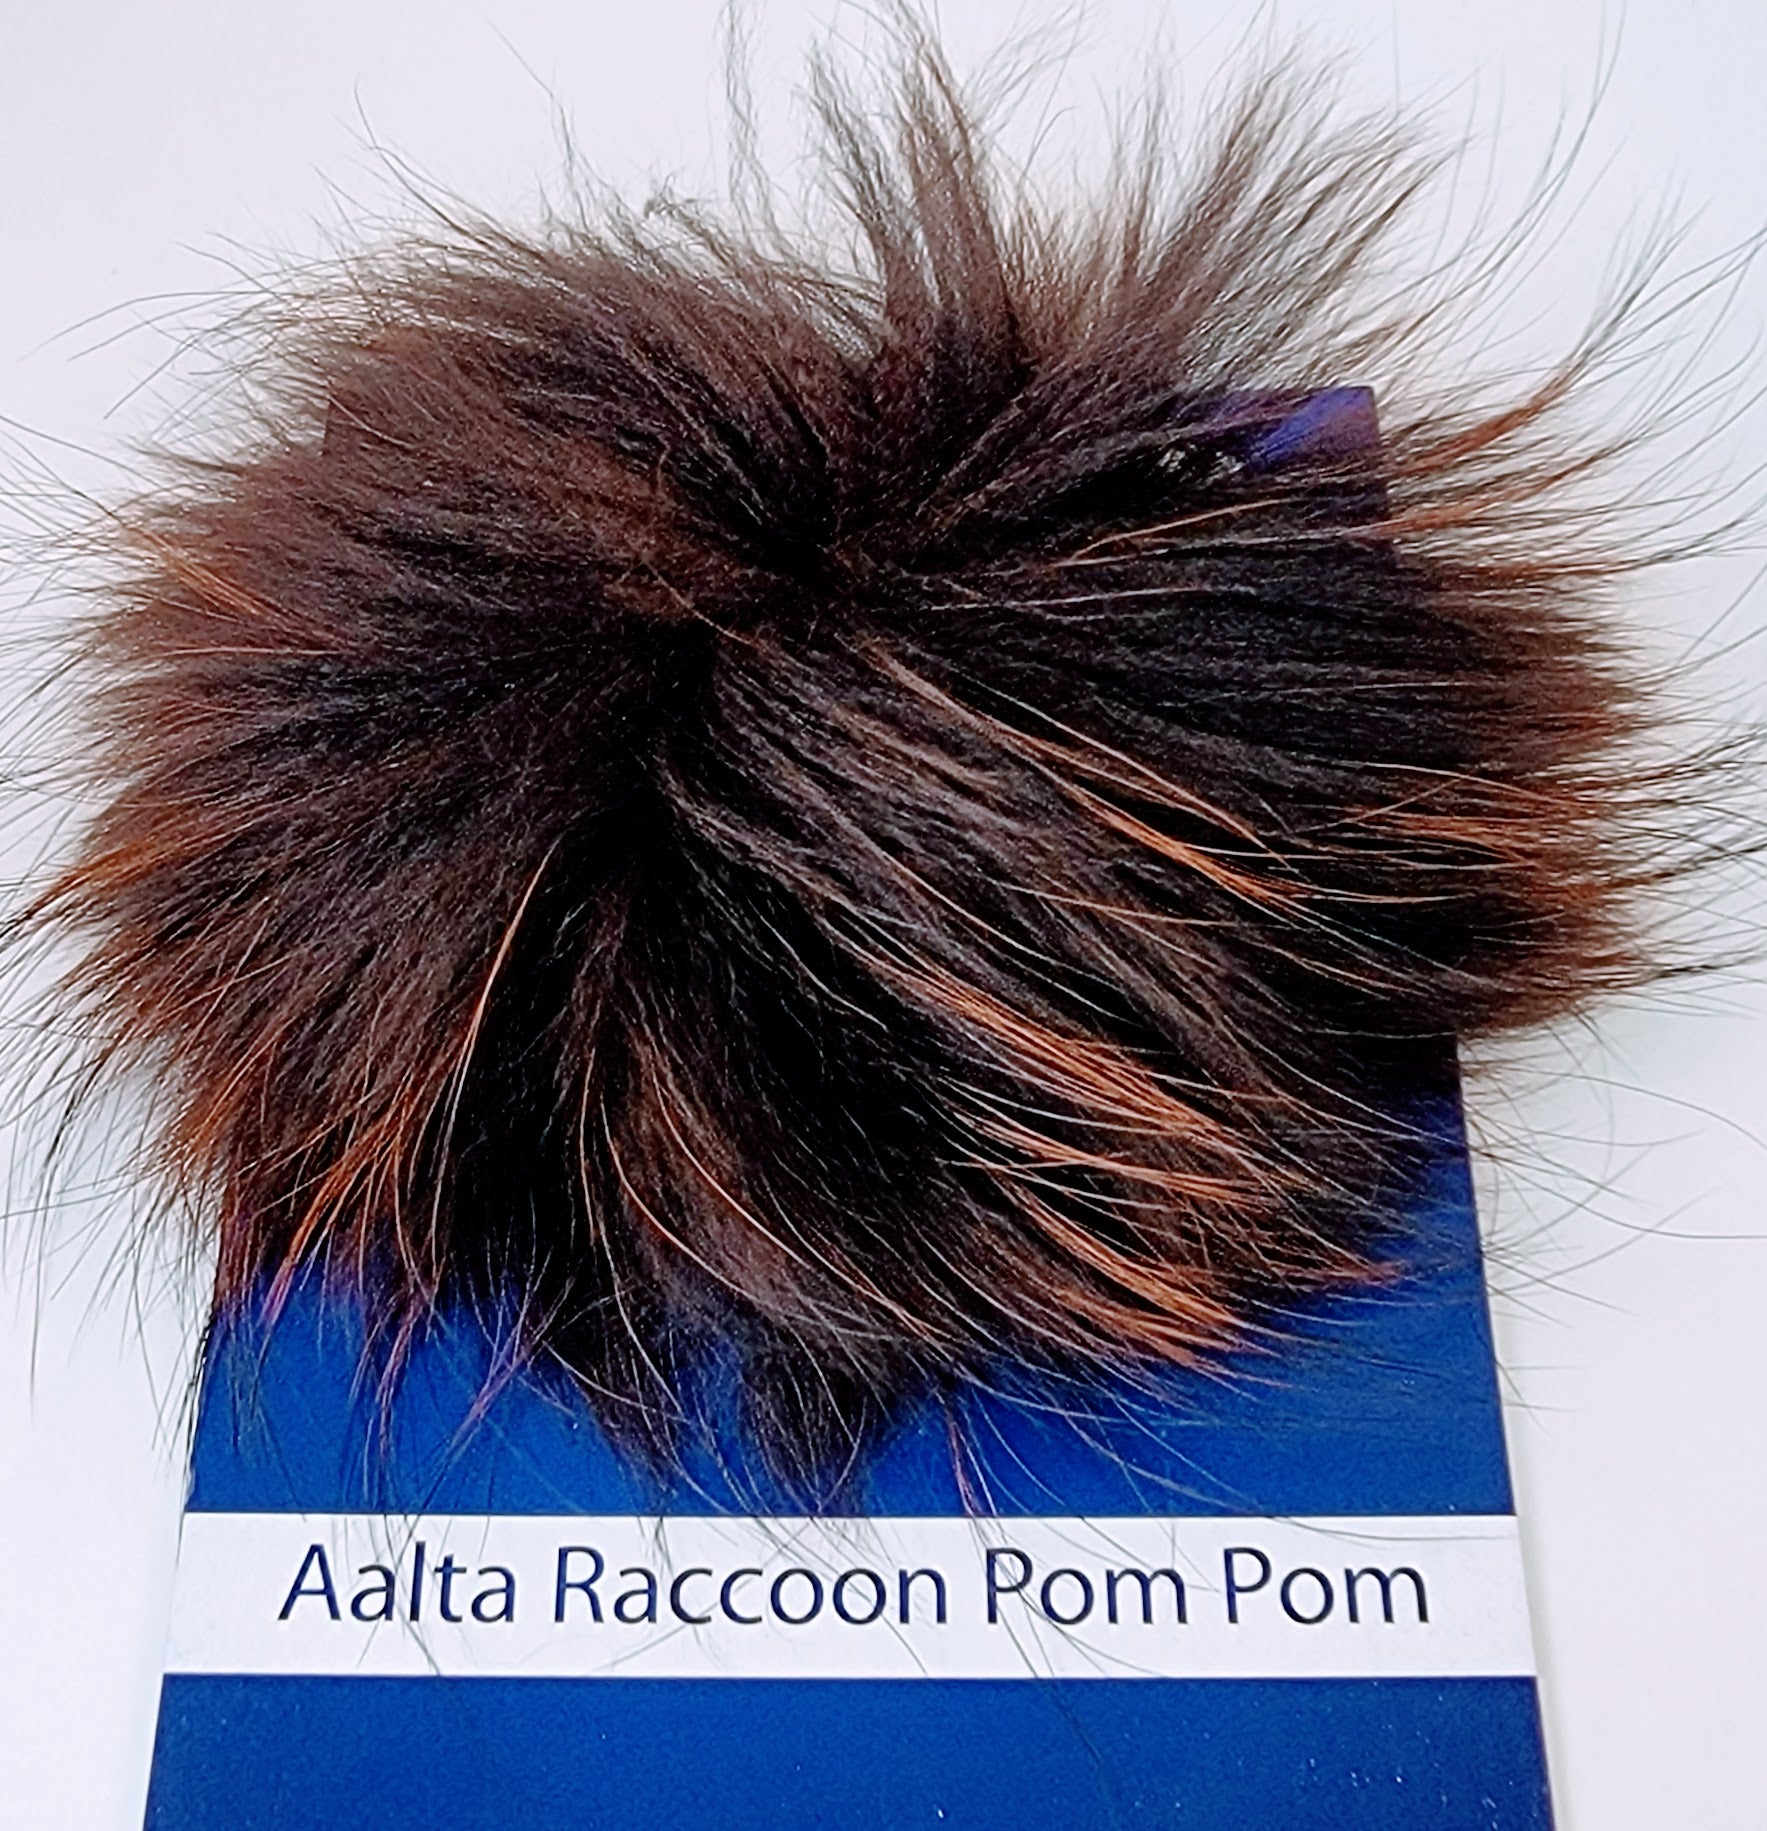 Fur Pom Poms from Aalta